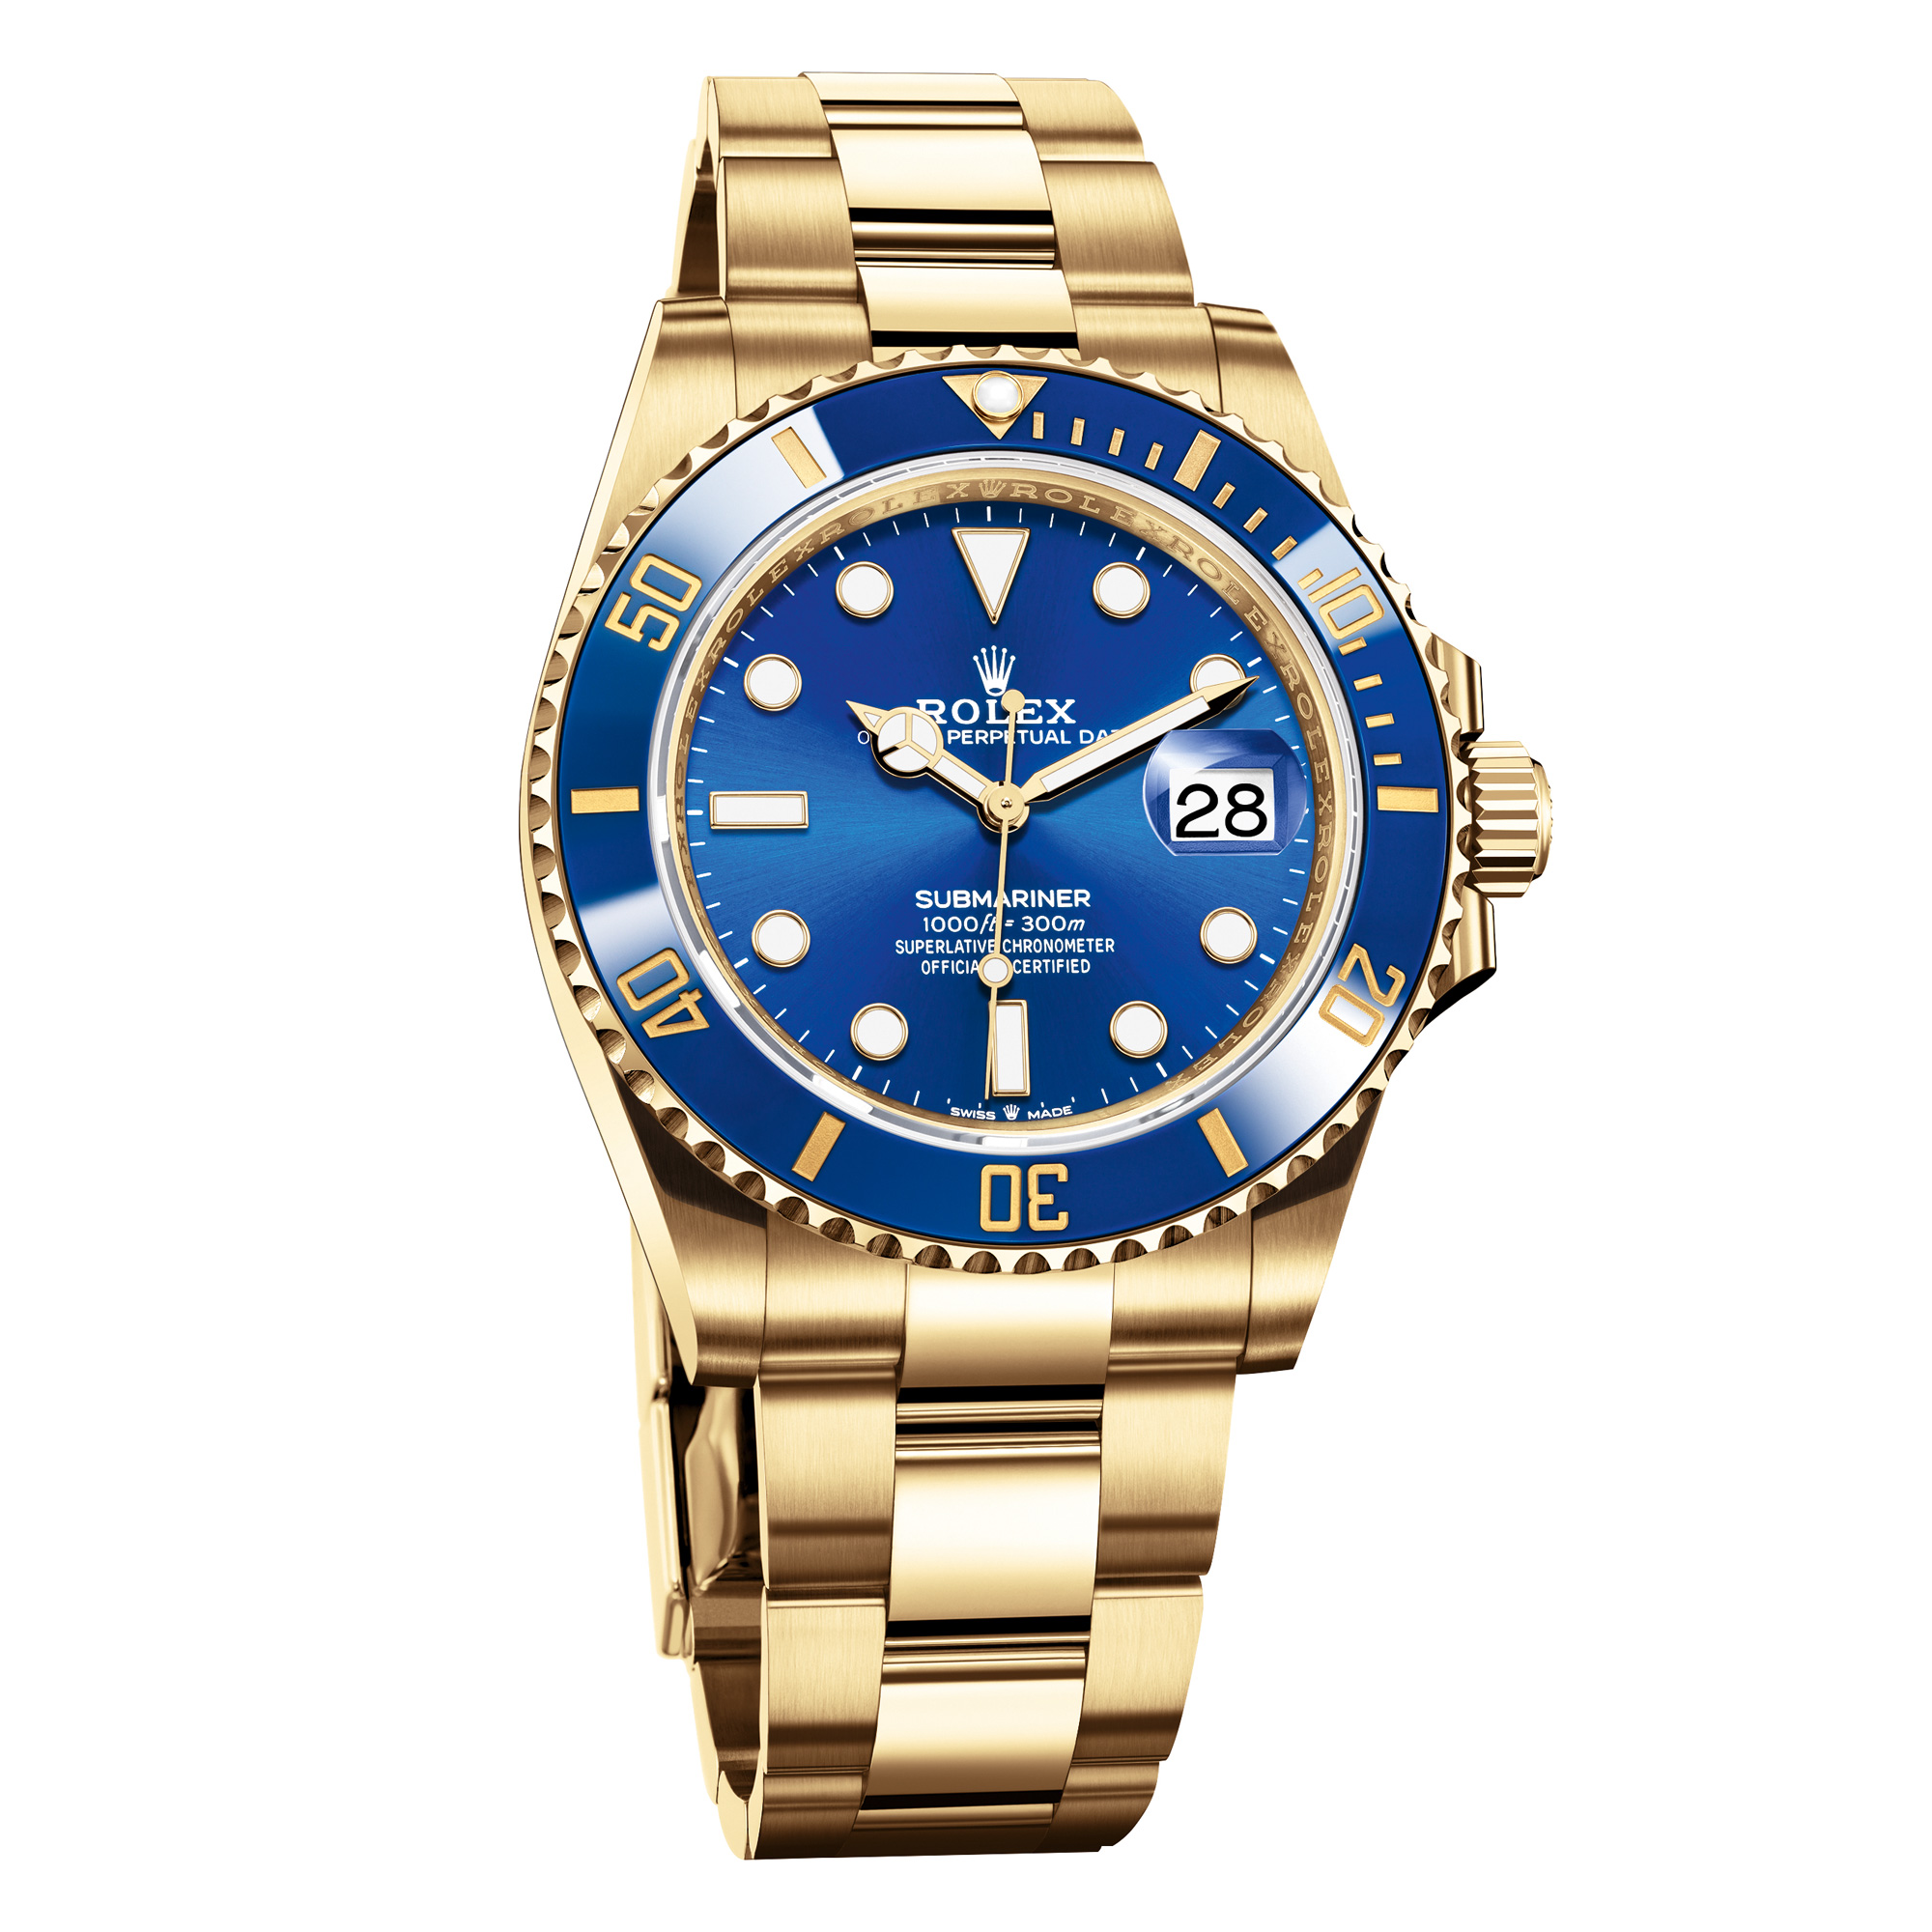 rolex submariner full gold blue dial